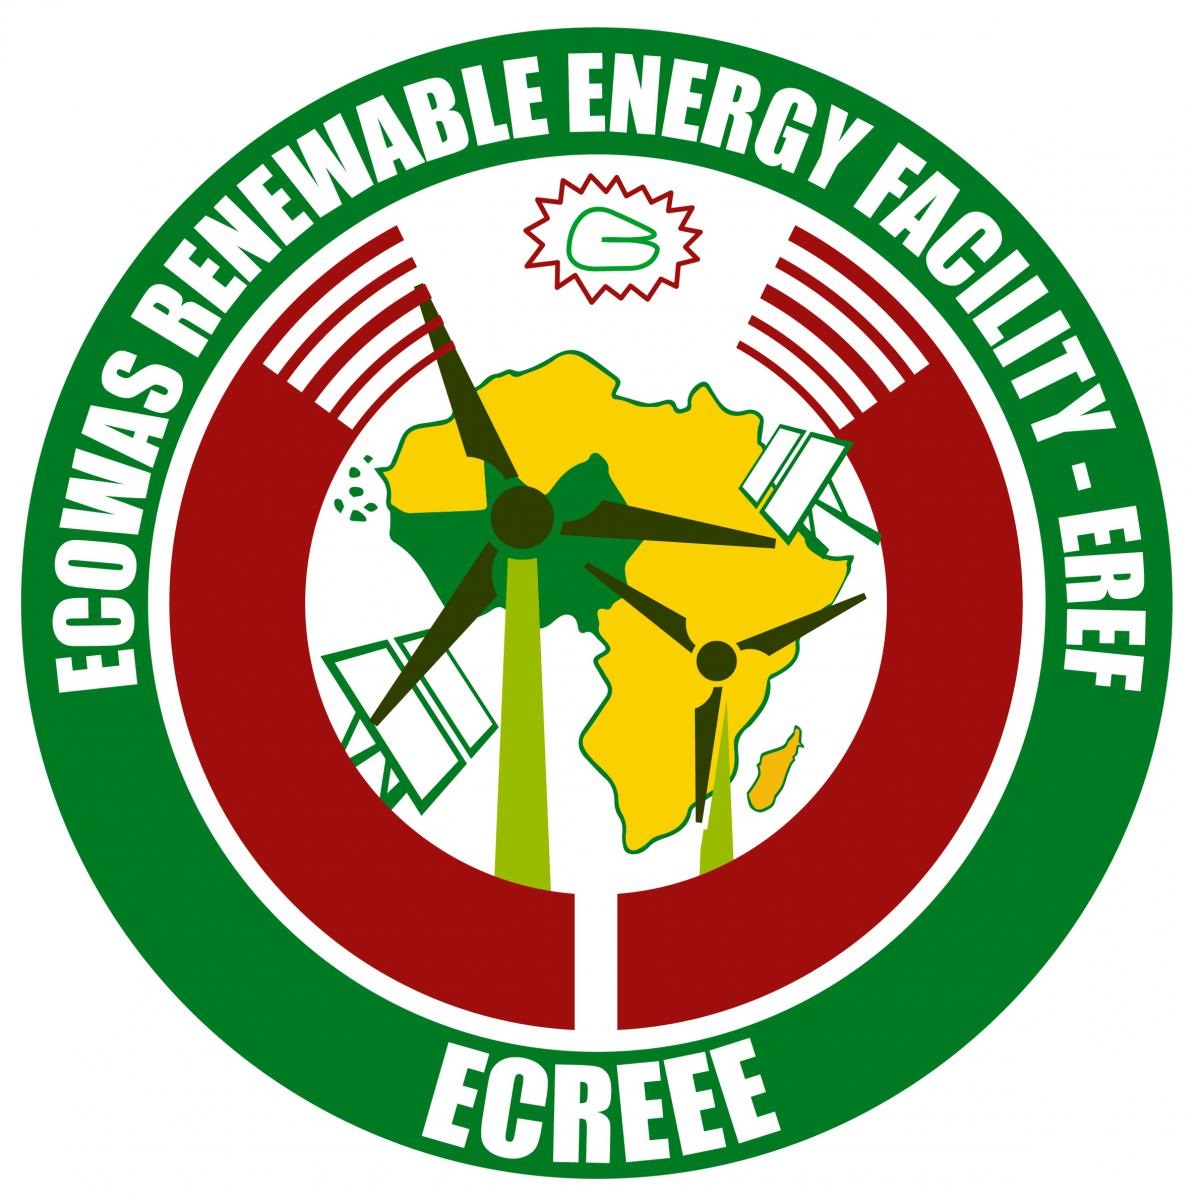 GN-SEC Video Impact Story – The ECOWAS Renewable Energy Facility (EREF)